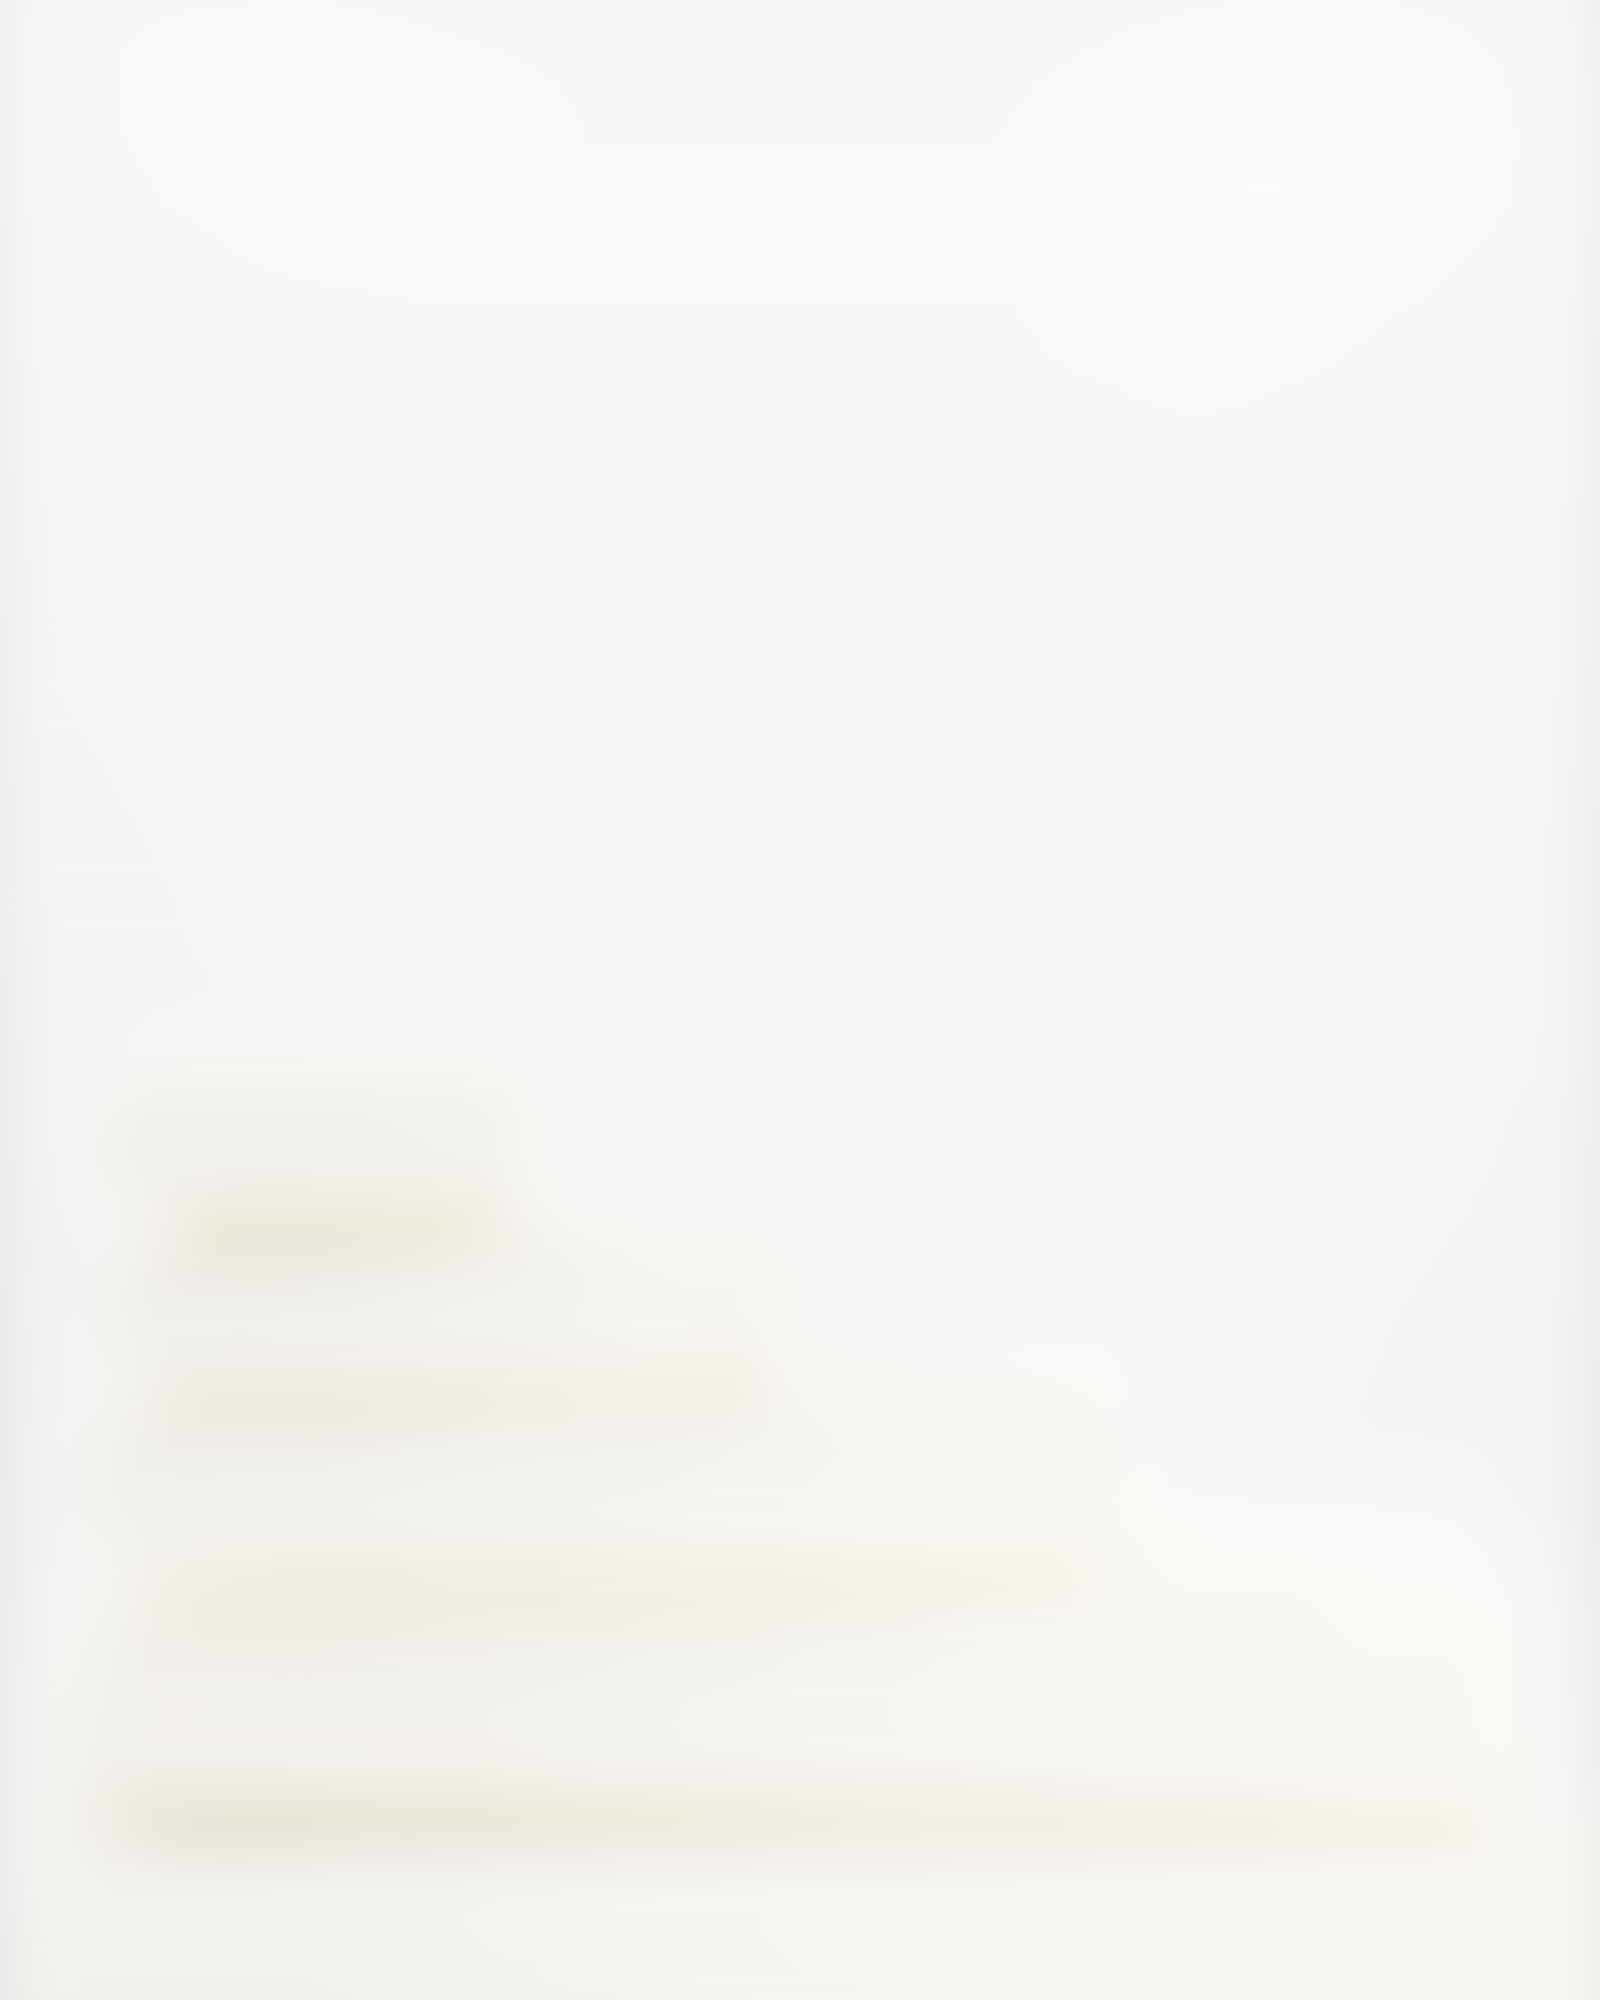 Cawö - Life Style Uni 7007 - Farbe: weiß - 600 - Gästetuch 30x50 cm